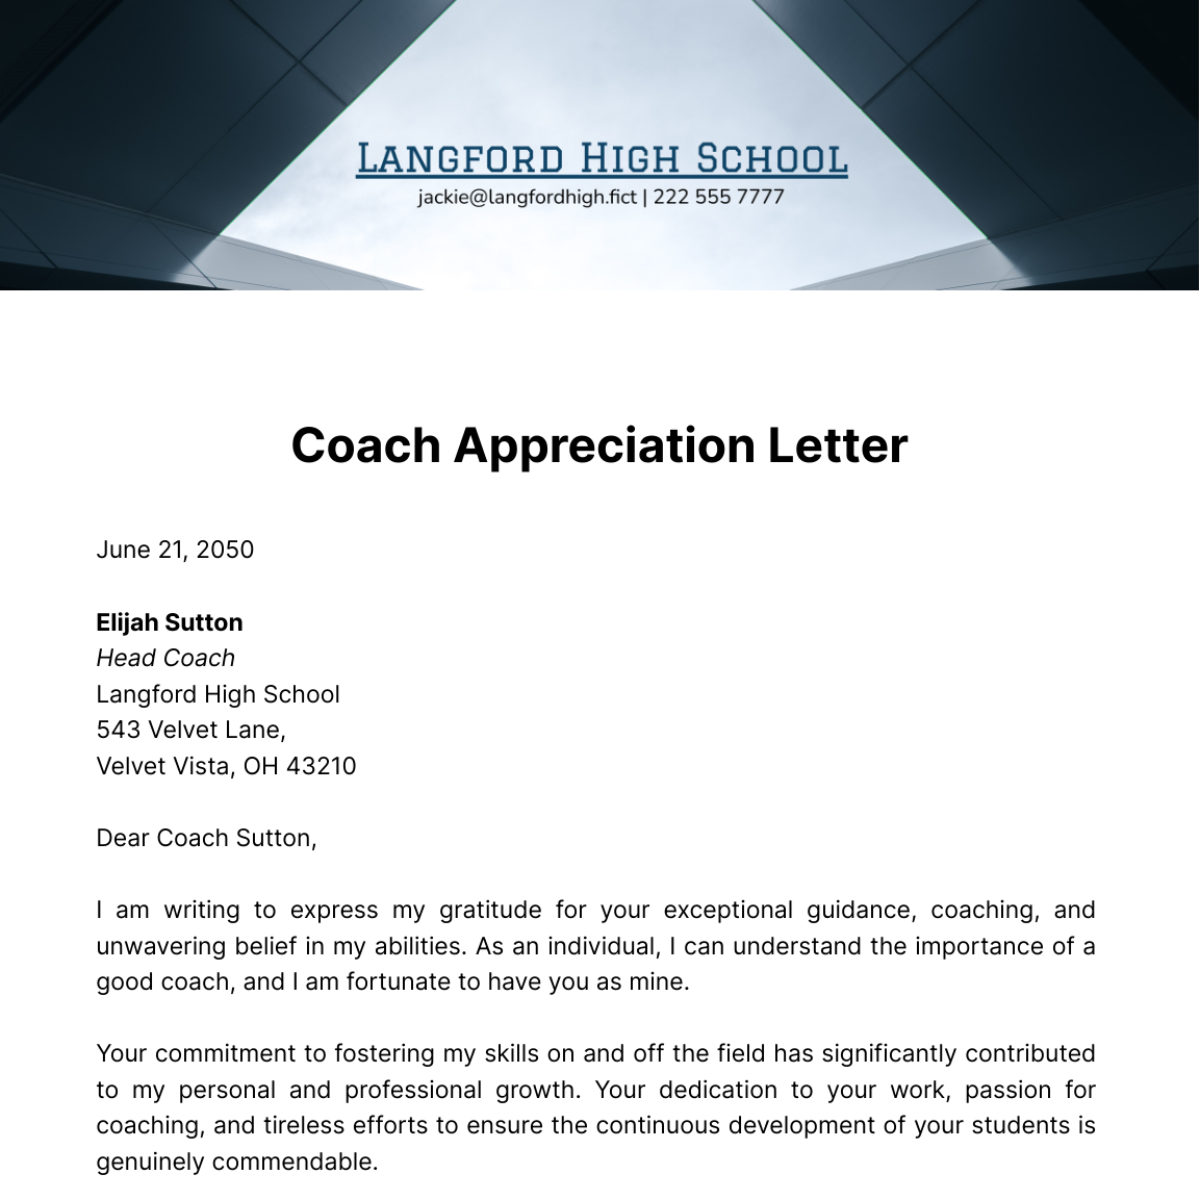 Coach Appreciation Letter Template